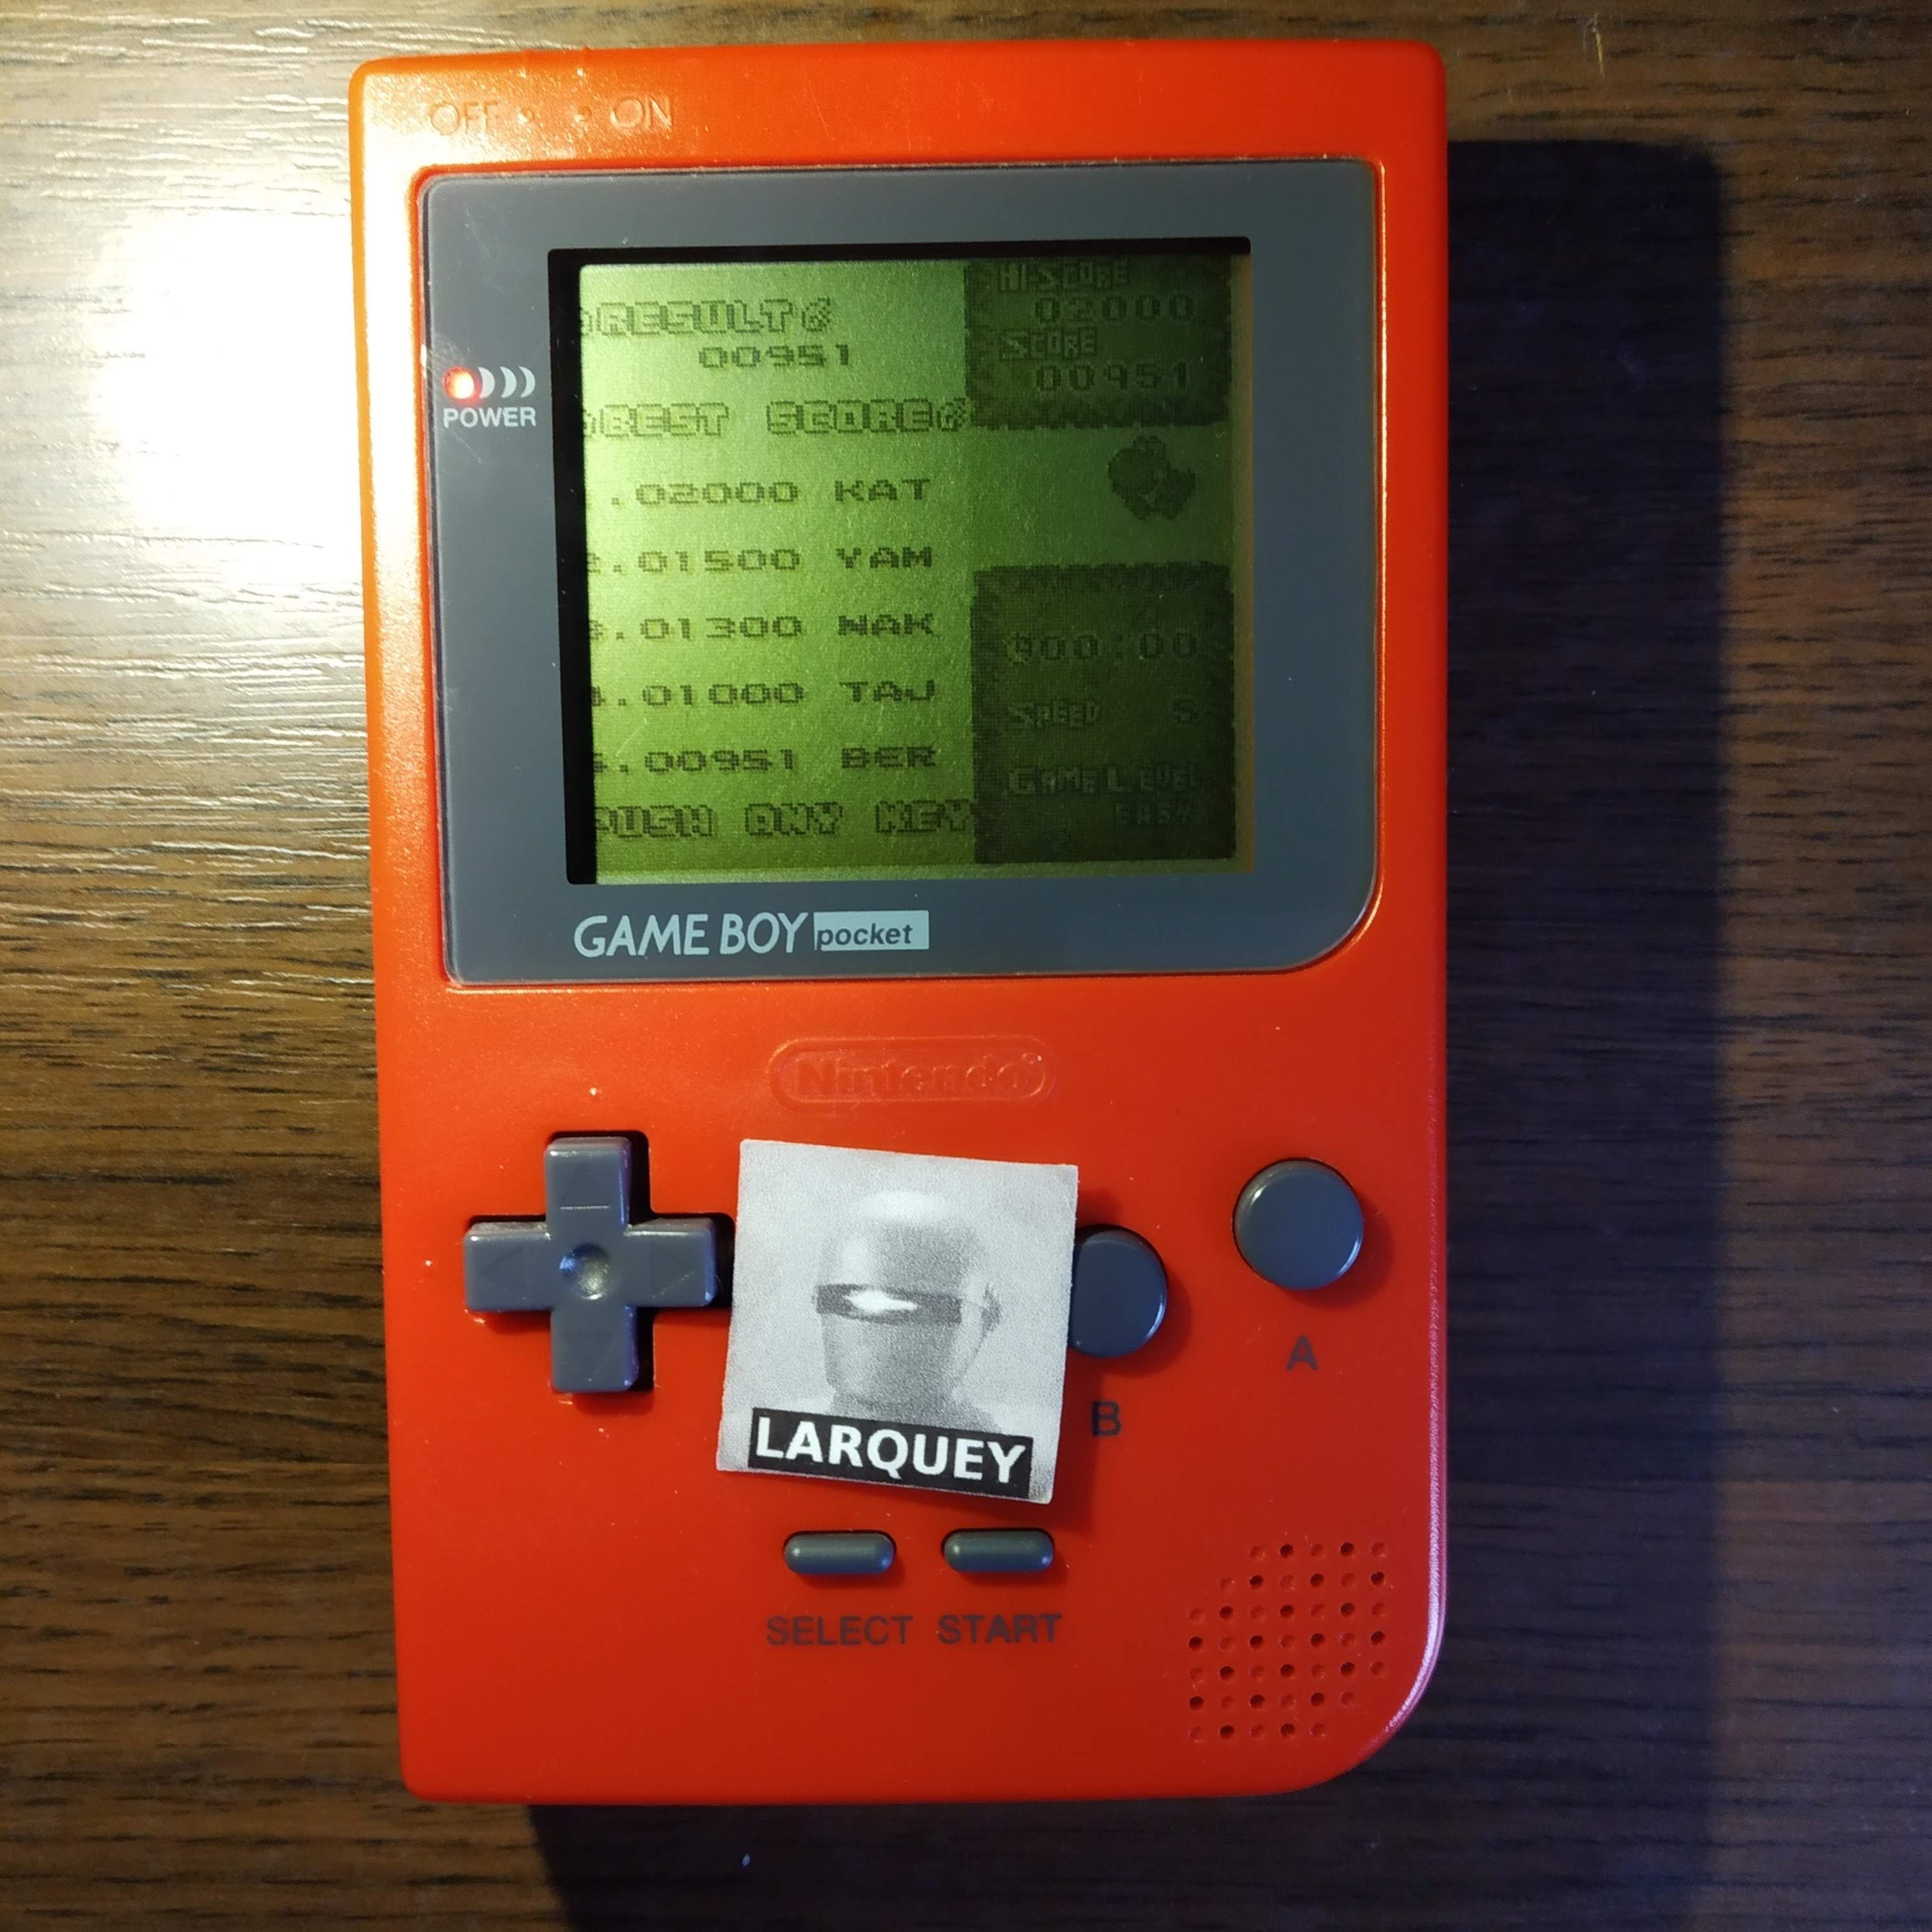 Larquey: Tetris Attack: Time Trial [Easy] (Game Boy) 951 points on 2020-05-16 07:49:21